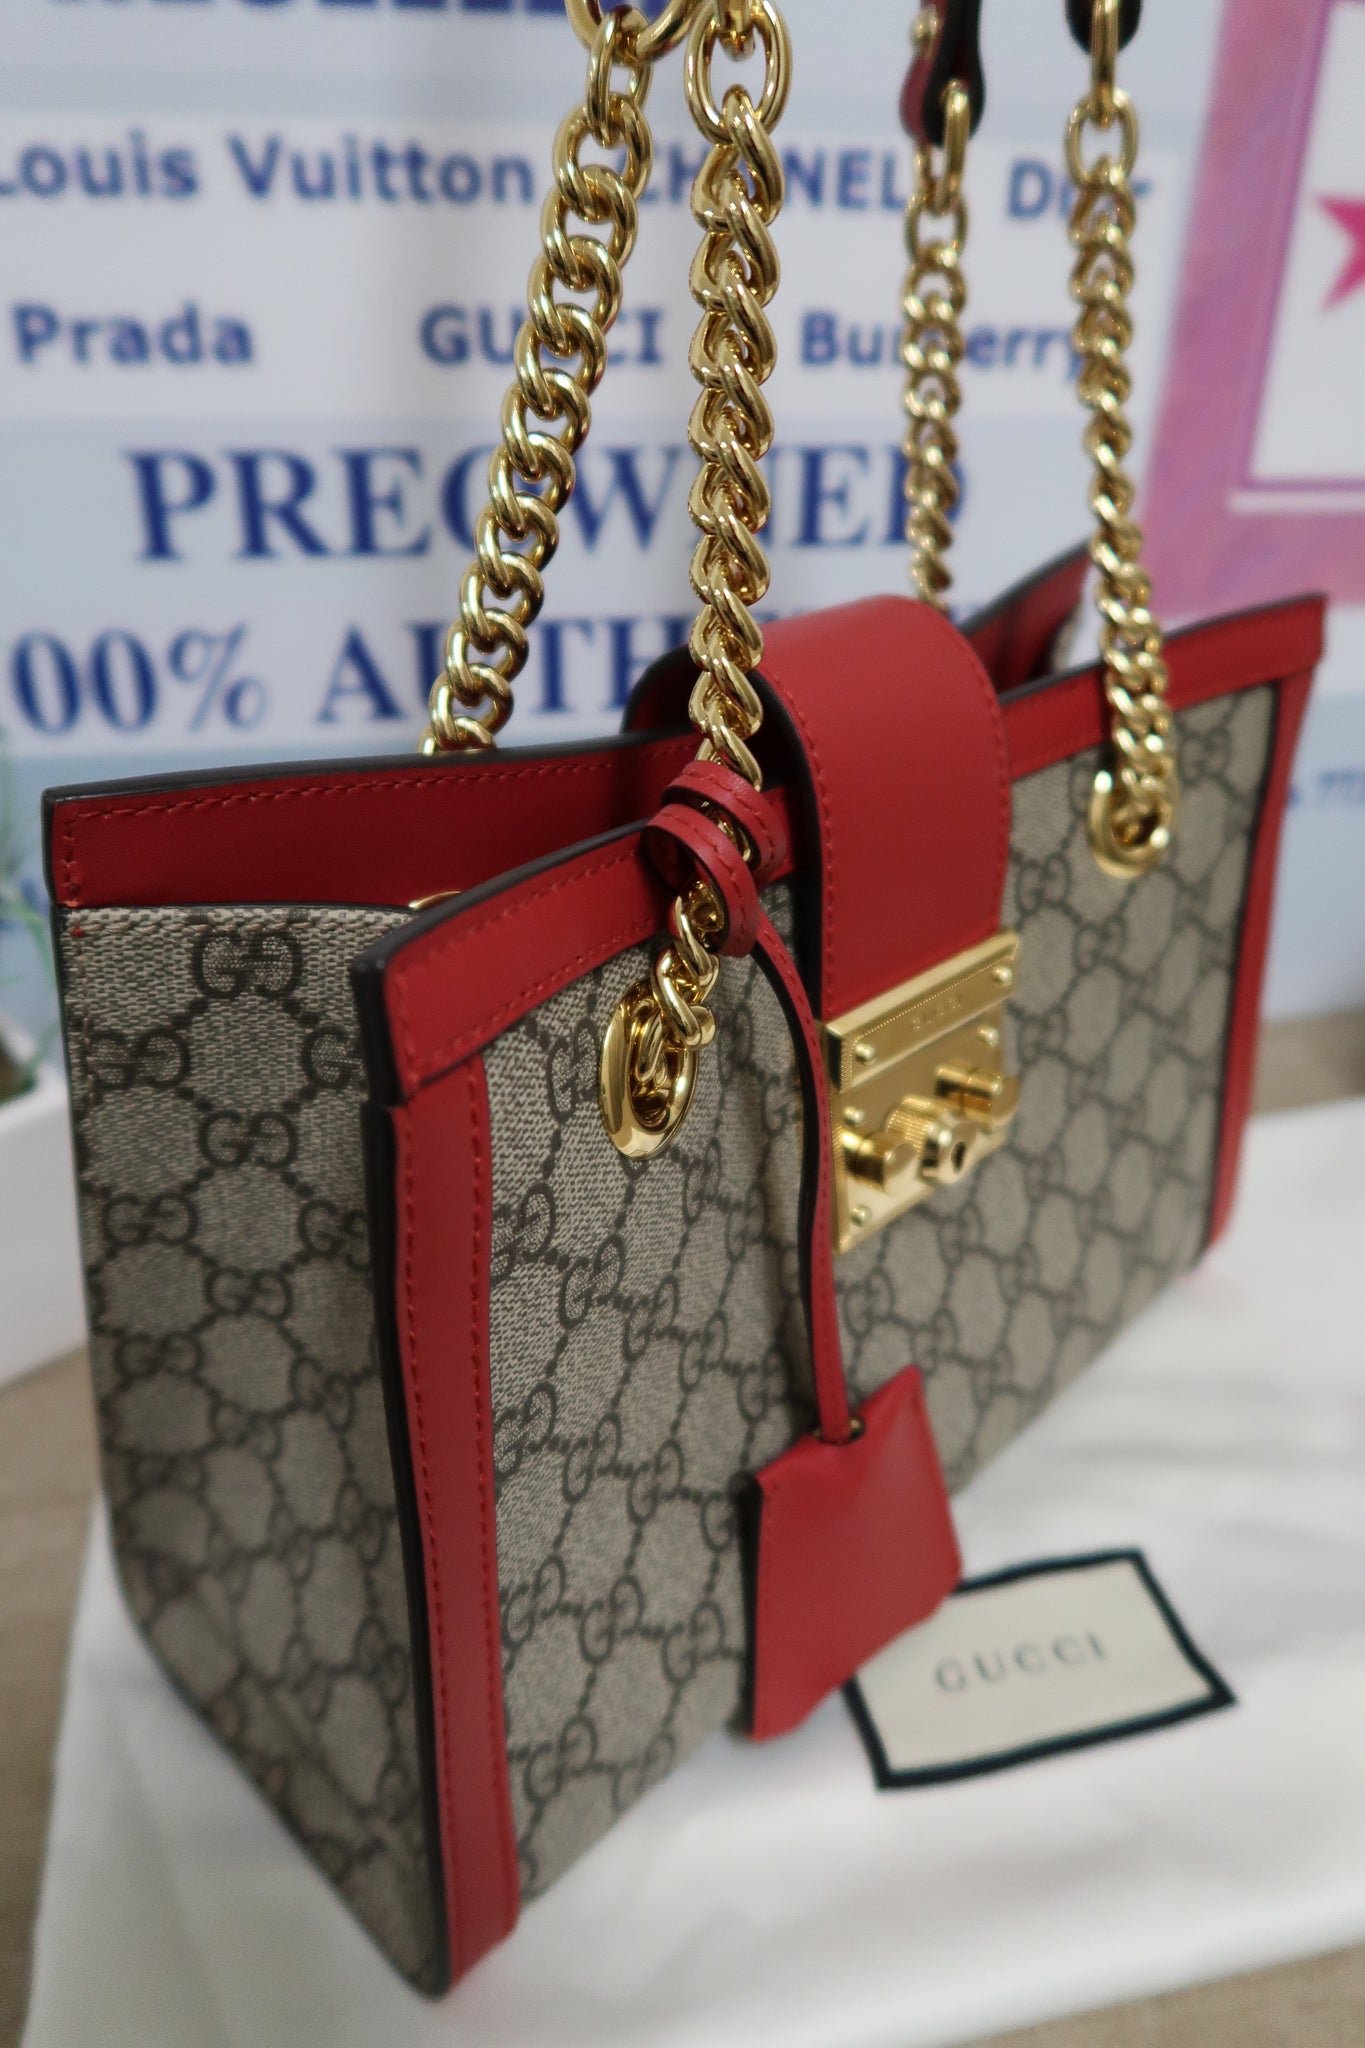 Gucci Padlock Small GG Supreme Shoulder Bag